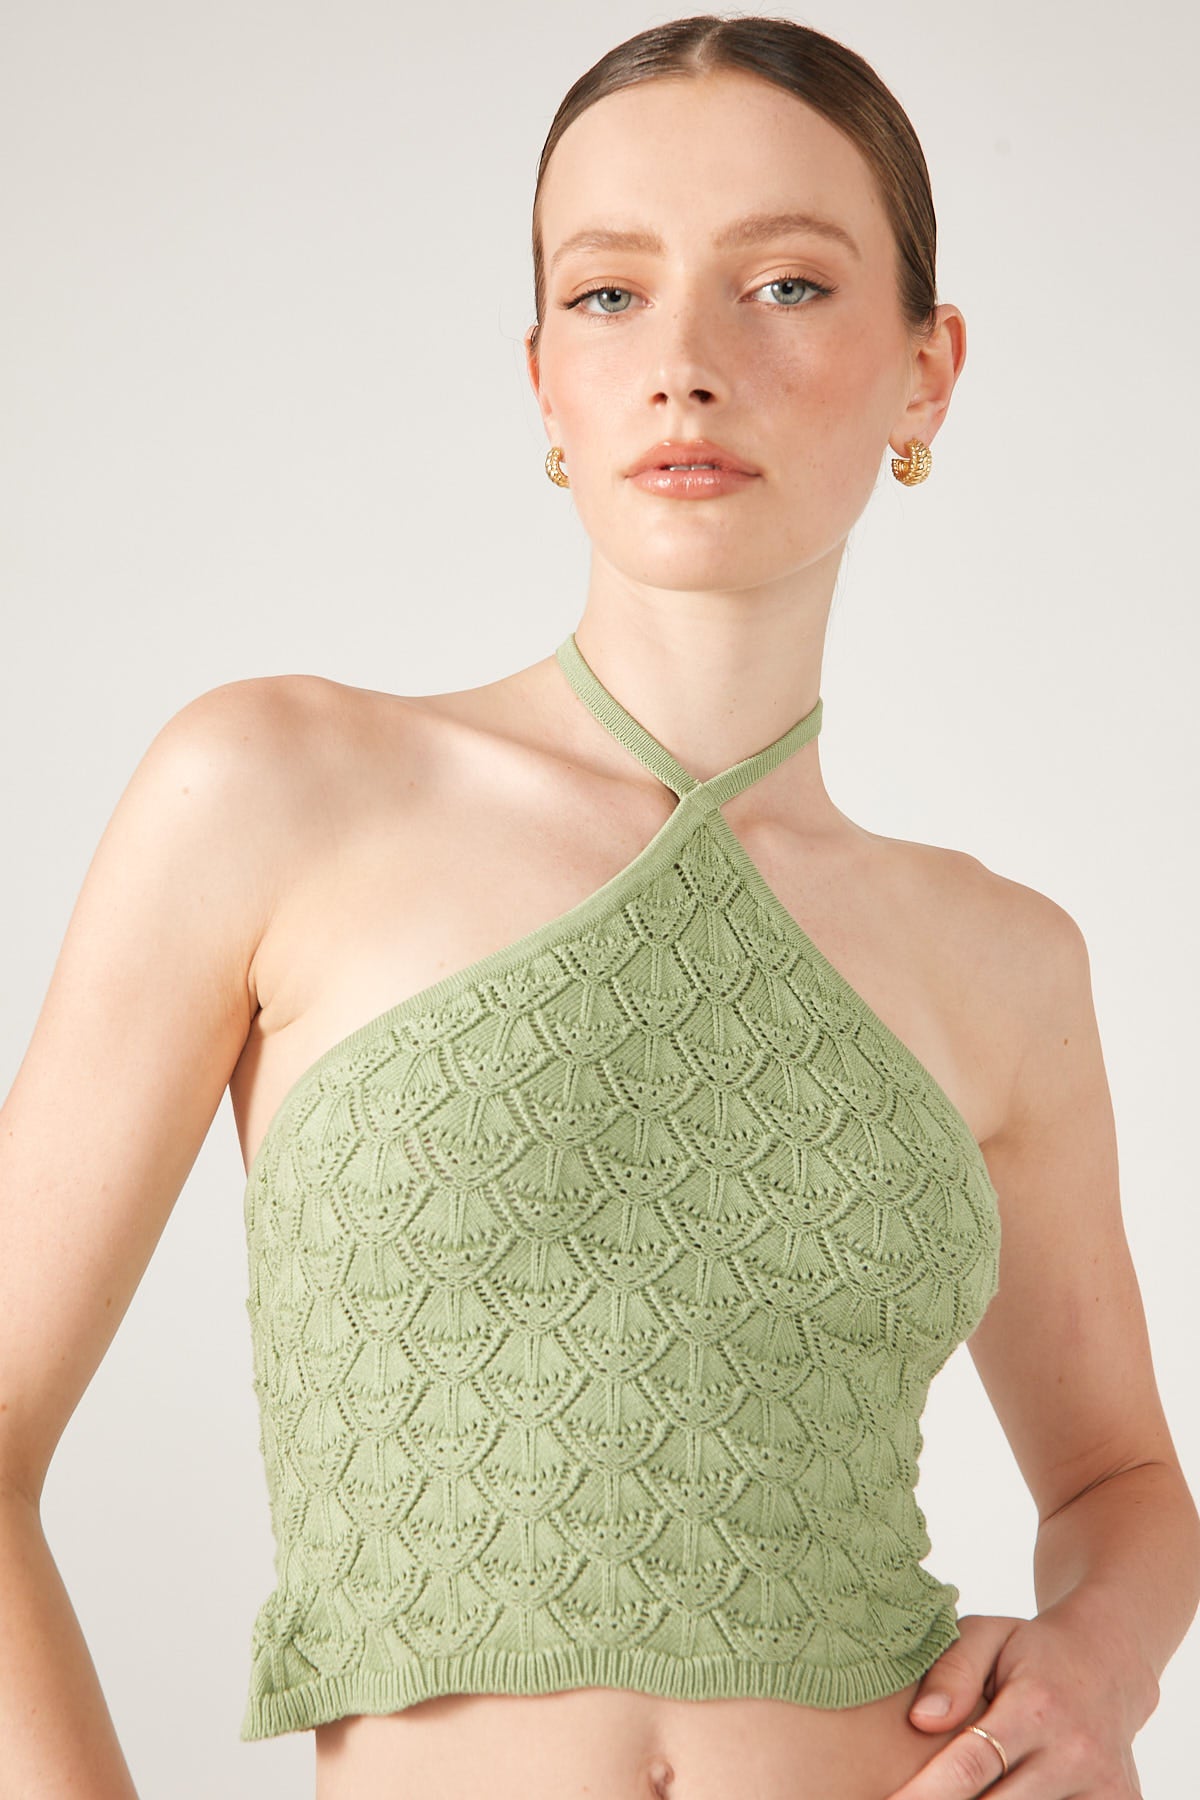 Perfect Stranger Dominique Elissa Golden Hour Crochet Knit Halter Top Green